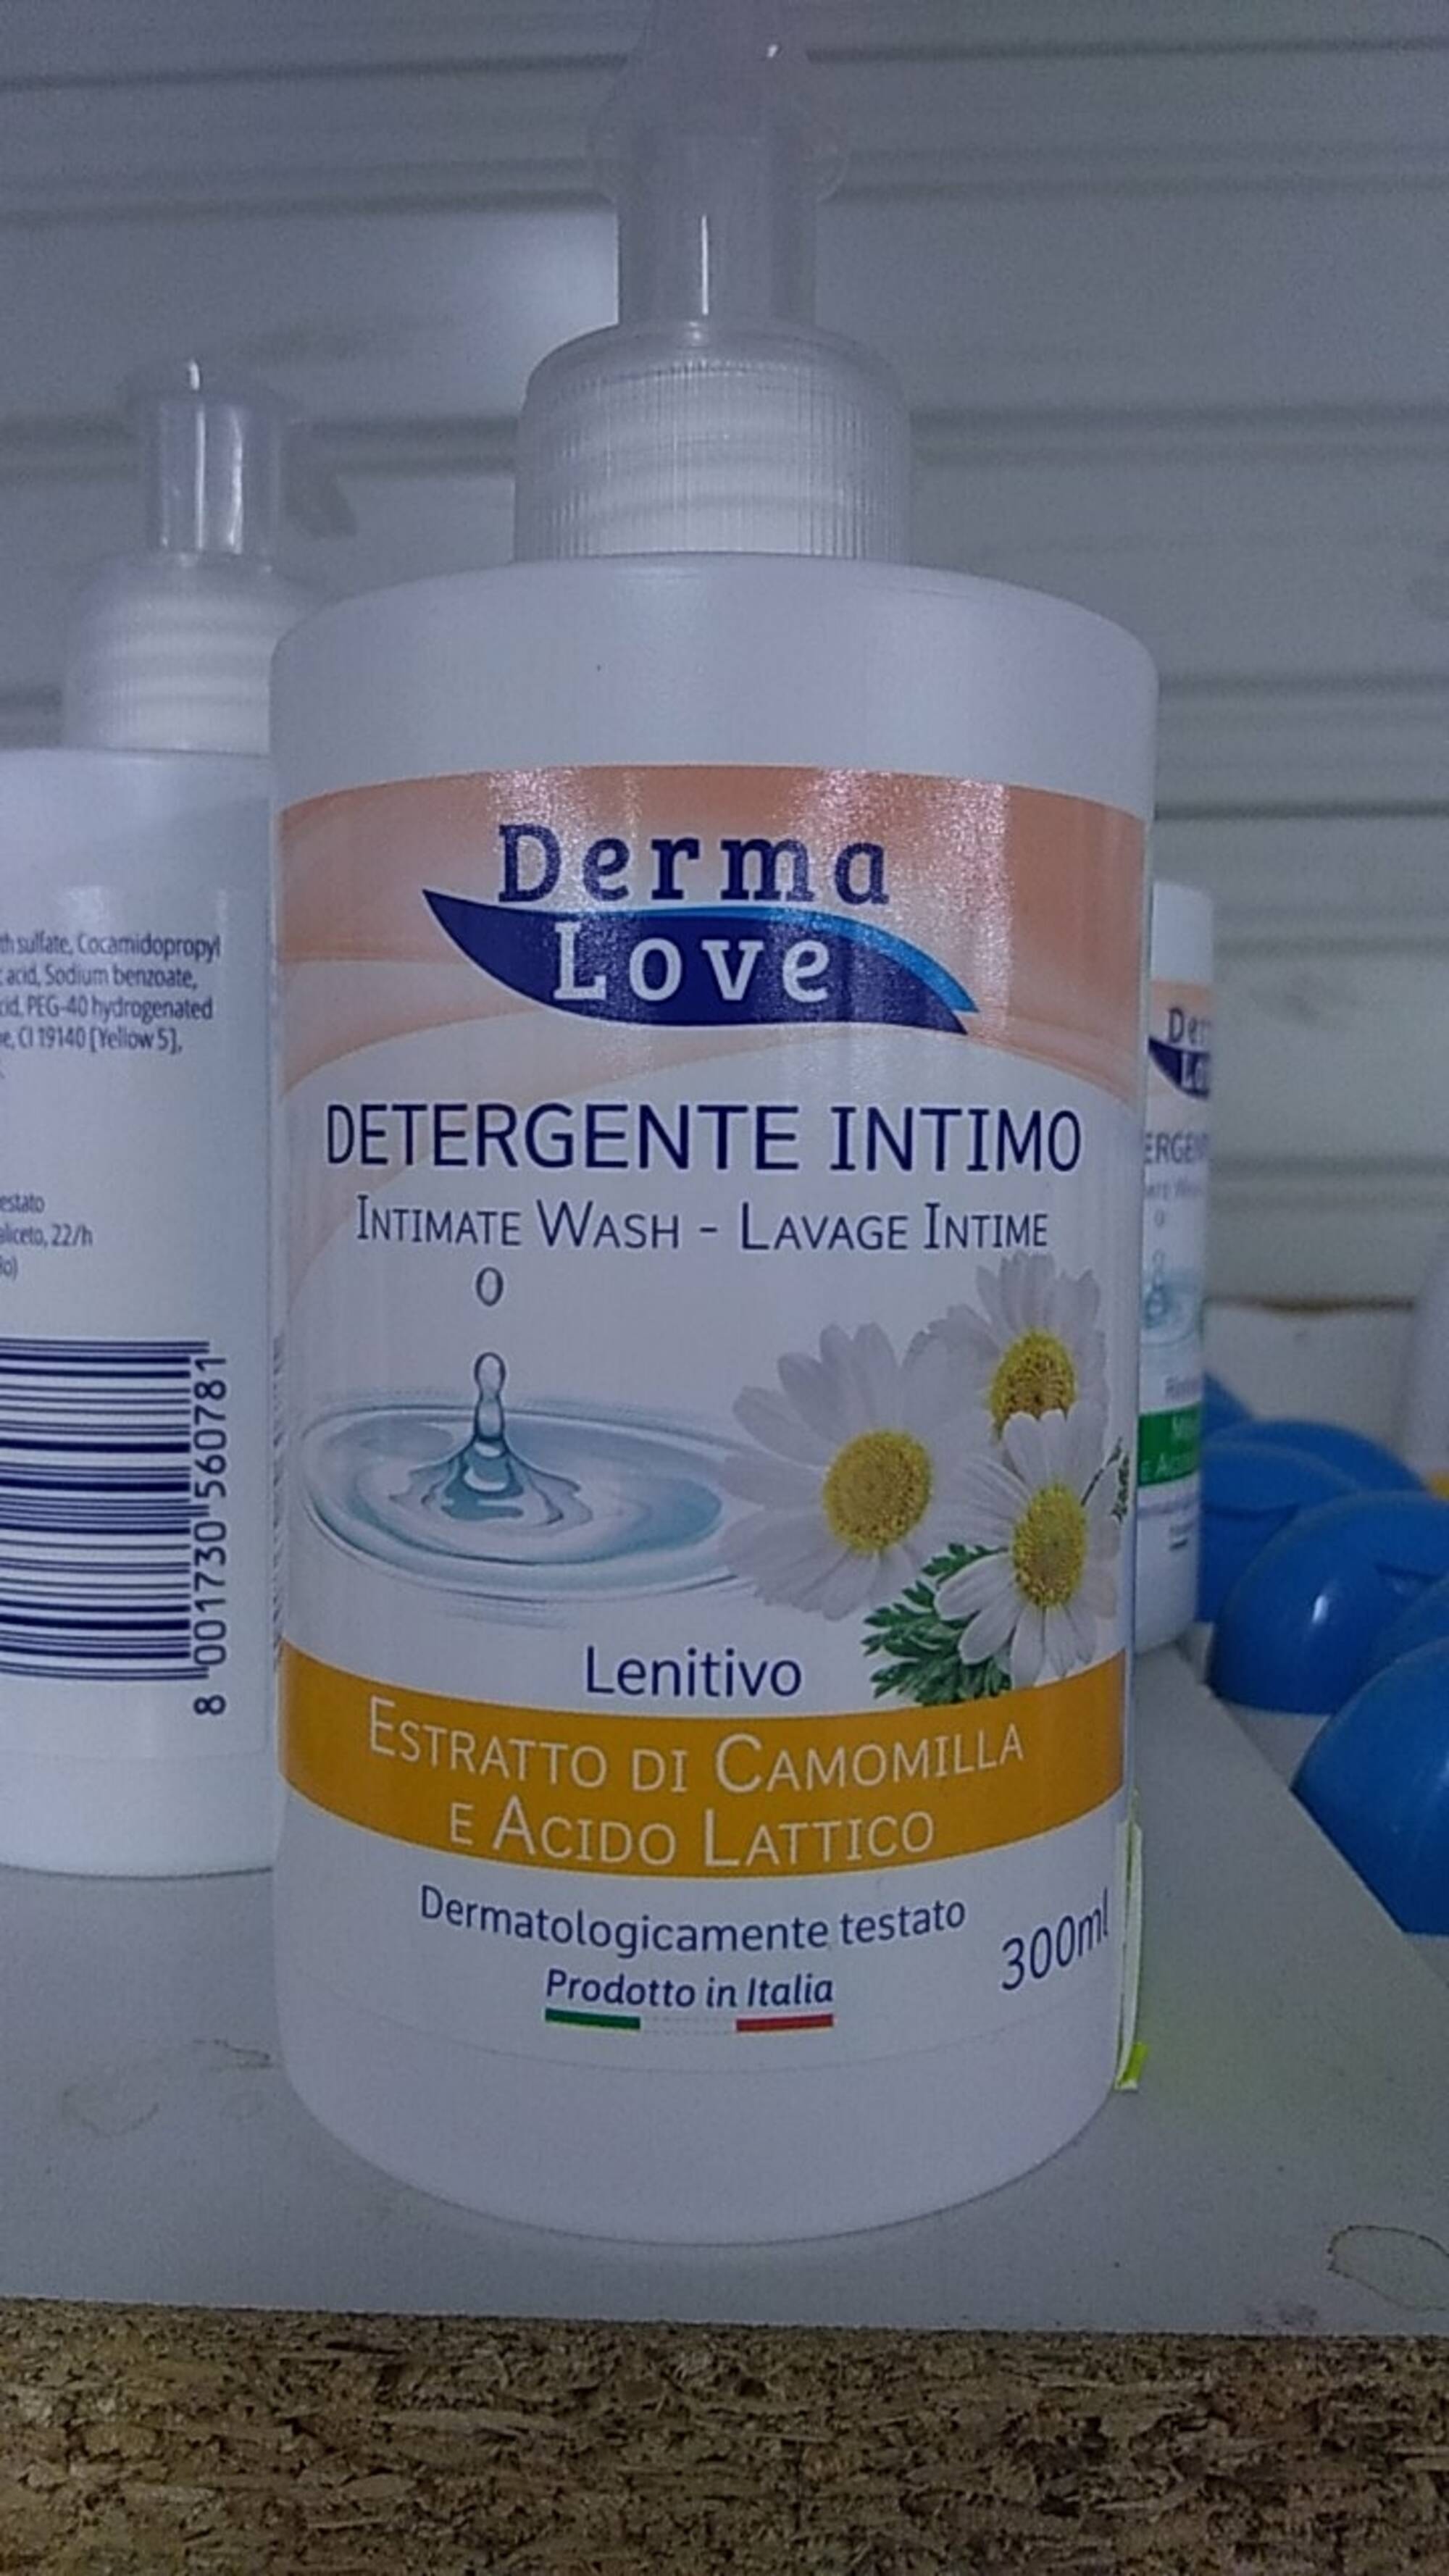 DERMA LOVE - Detergente intimo - Lavage intime